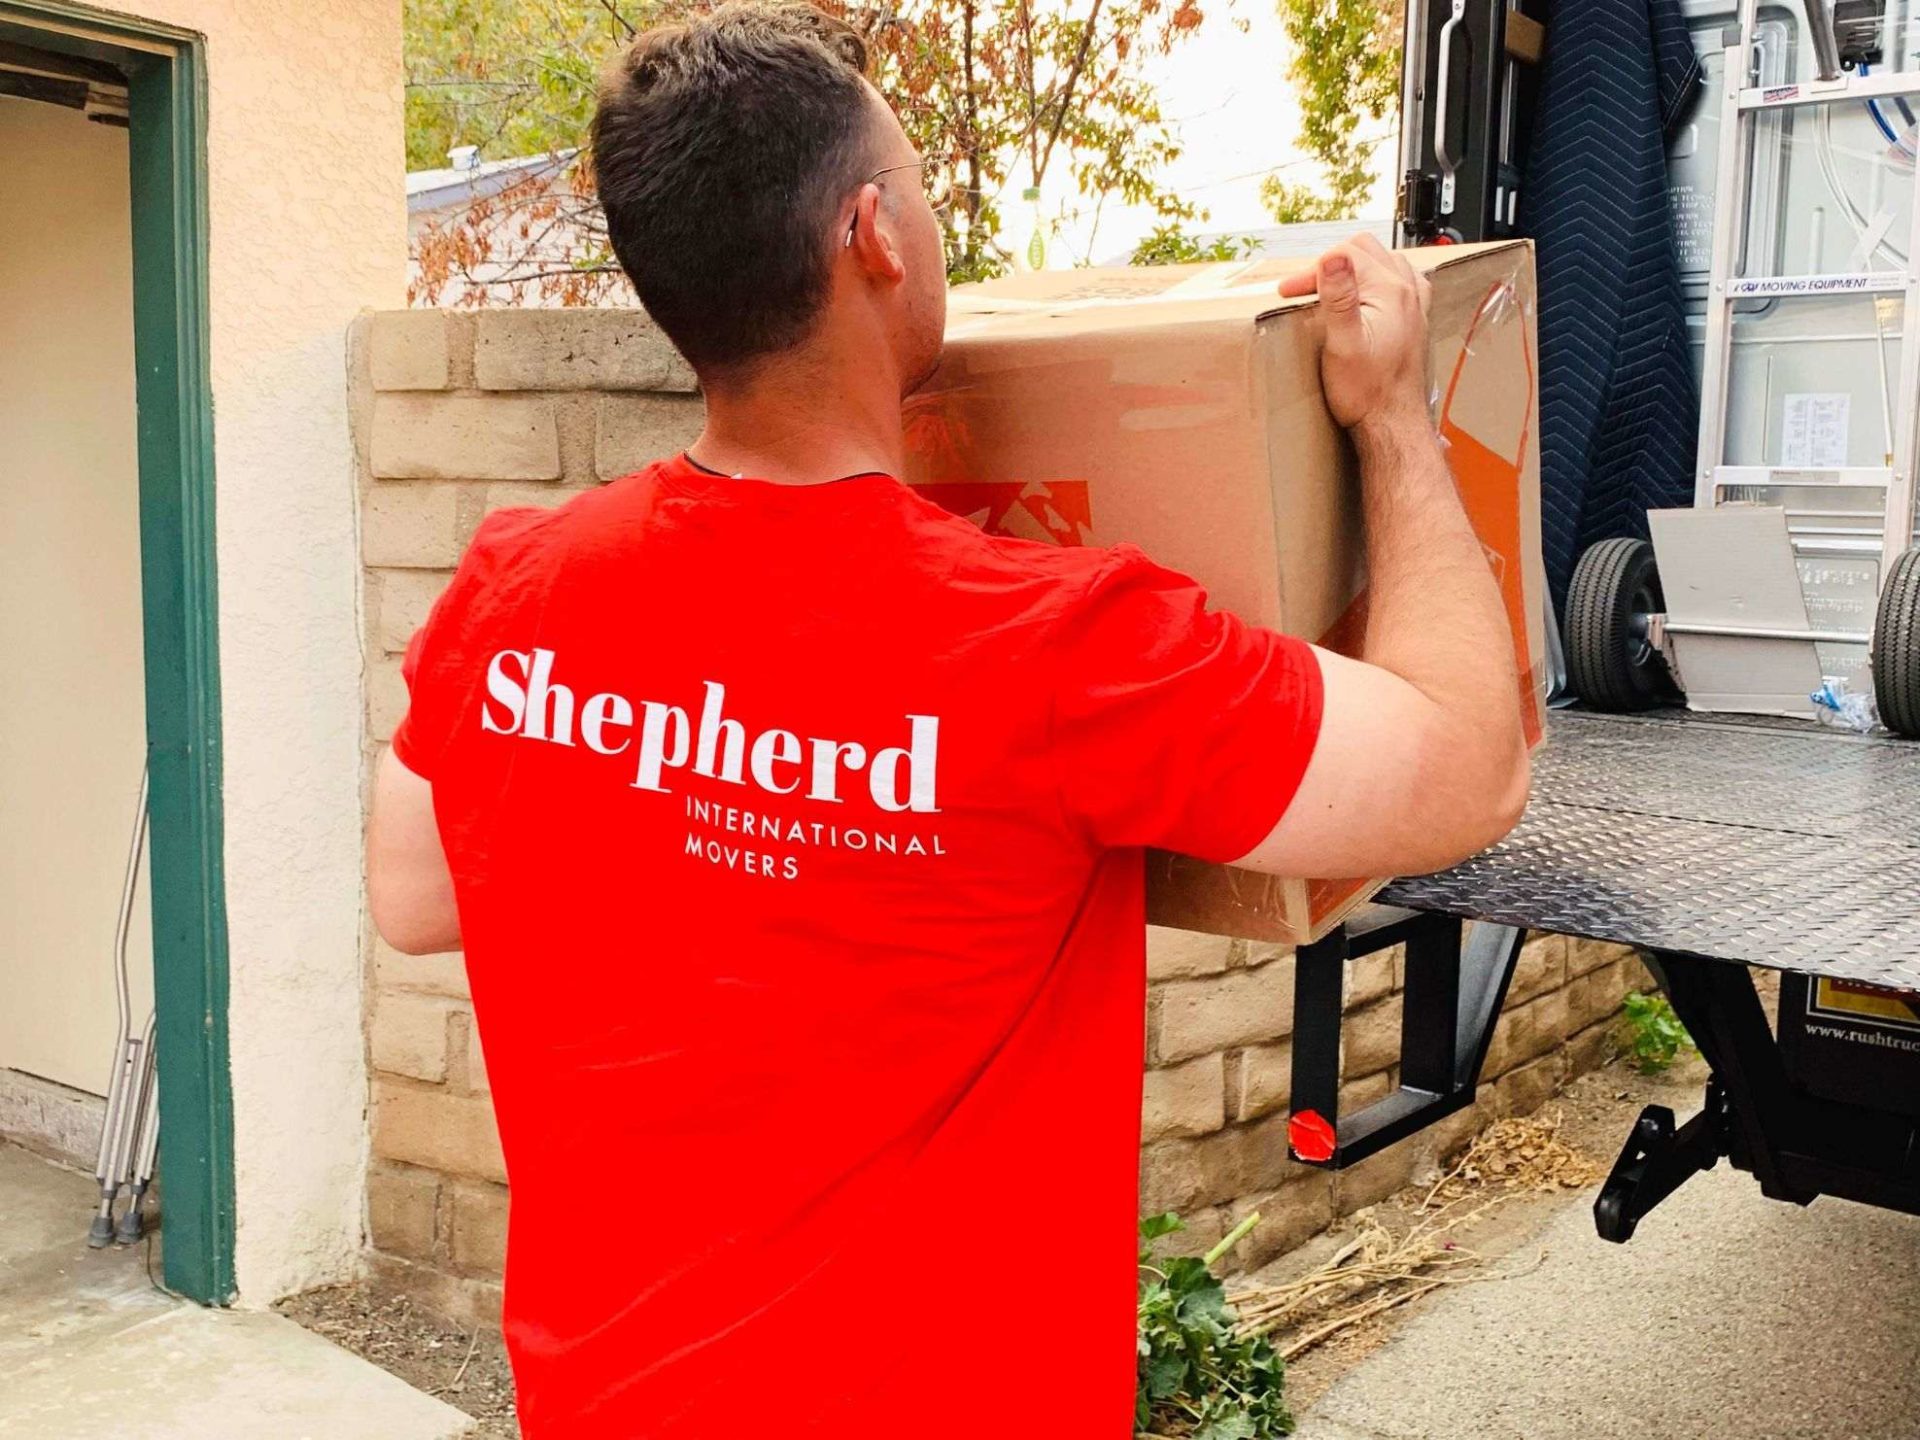 Shepherd professional mover